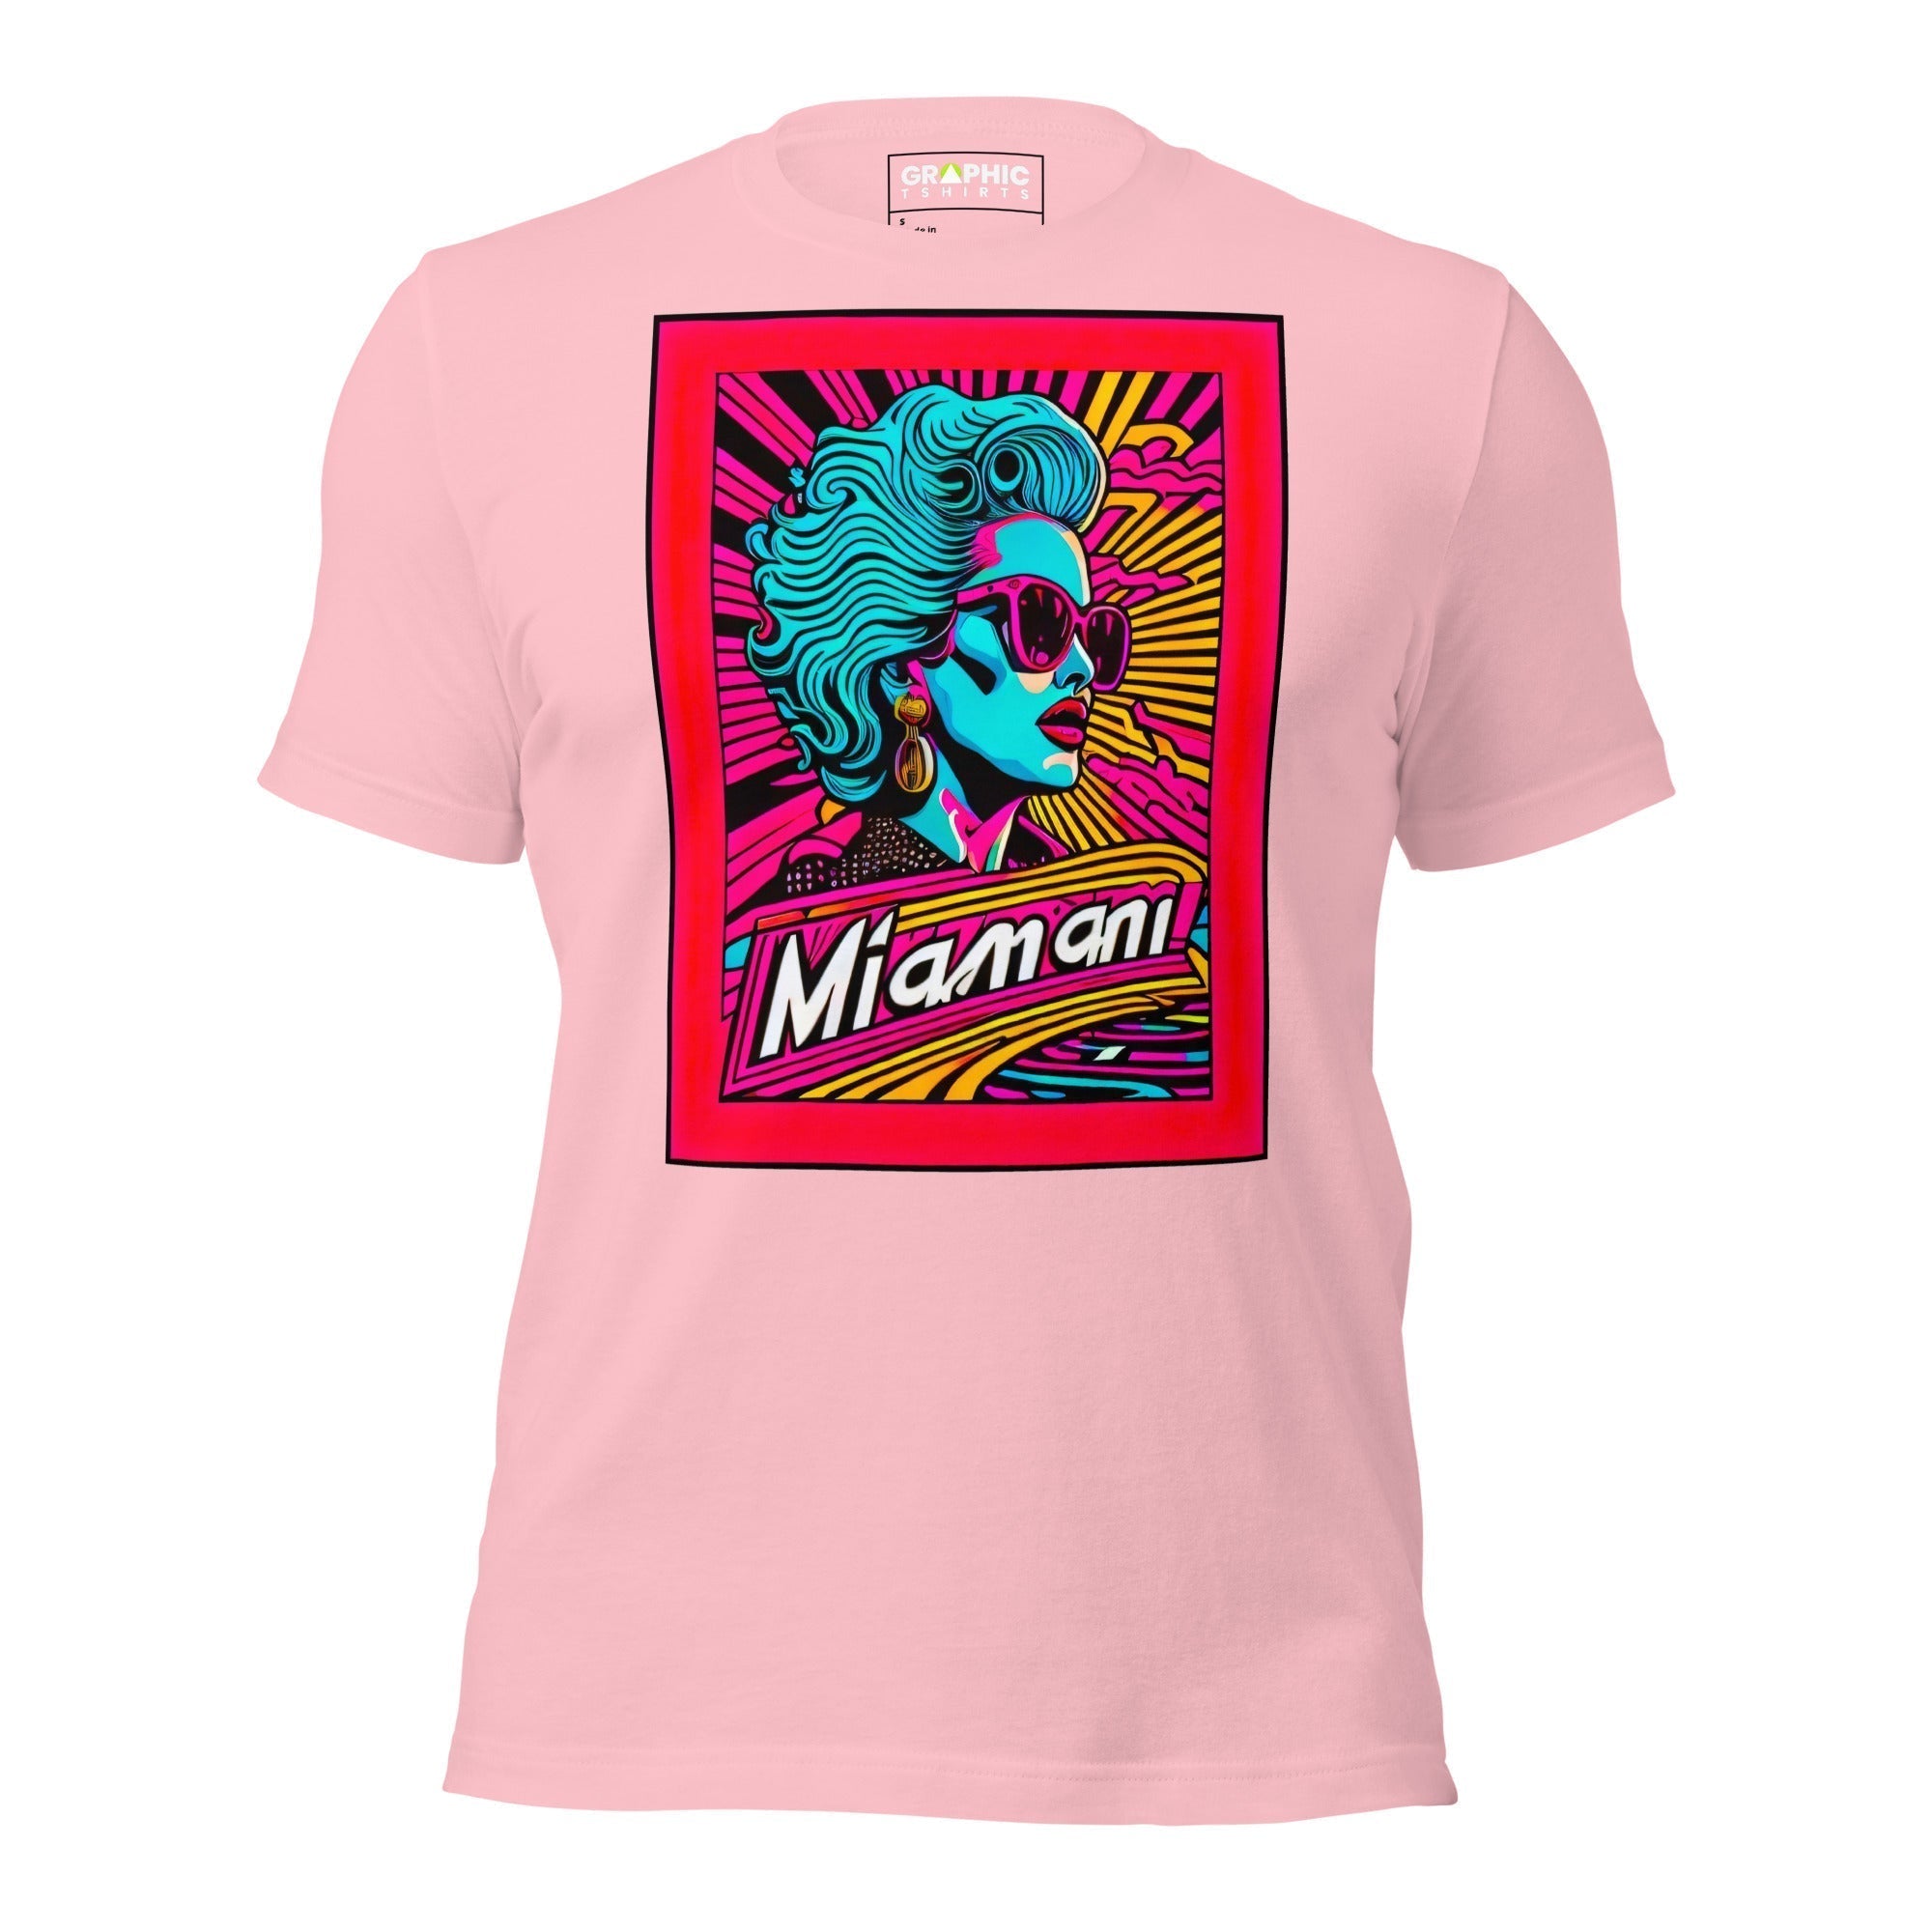 Unisex Crew Neck T-Shirt - Miami Heatwave Series v.24 - GRAPHIC T-SHIRTS